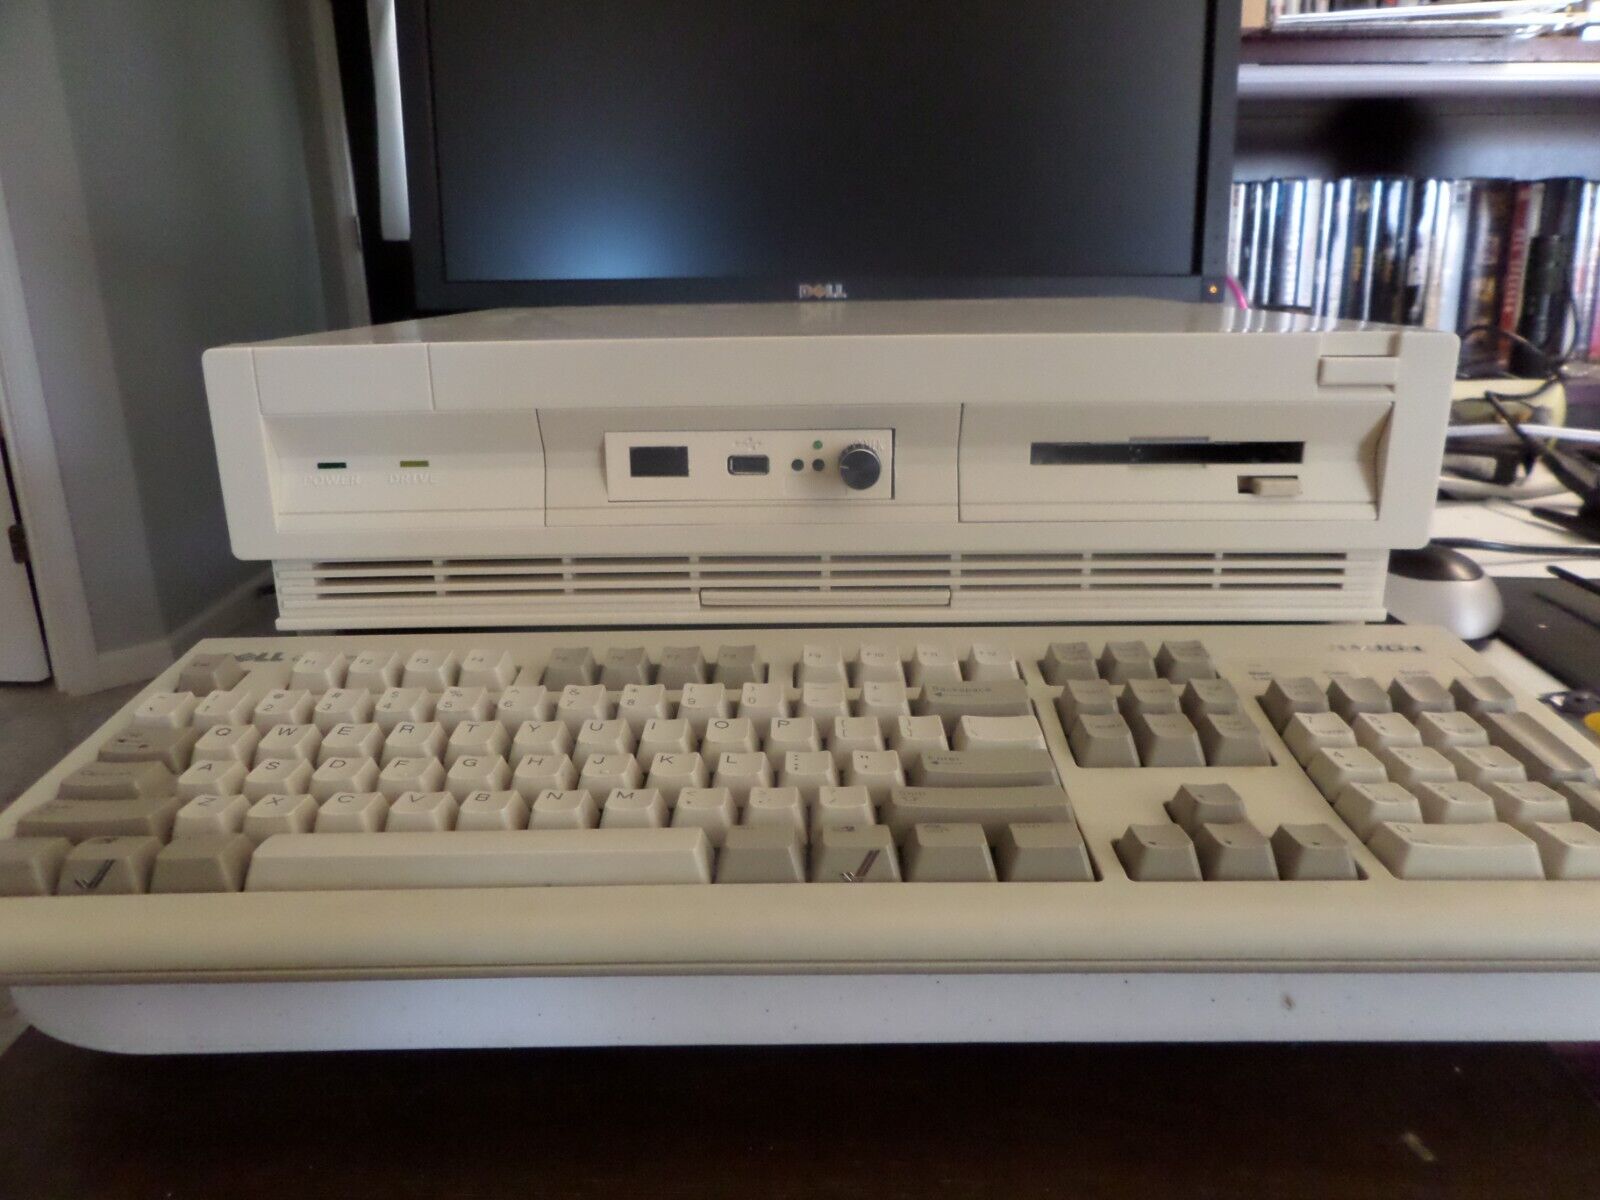 Amiga 500 in CheckMate Case, EMU68, Dual Floppy, RGB2HDMI, Keyboard & Mouse